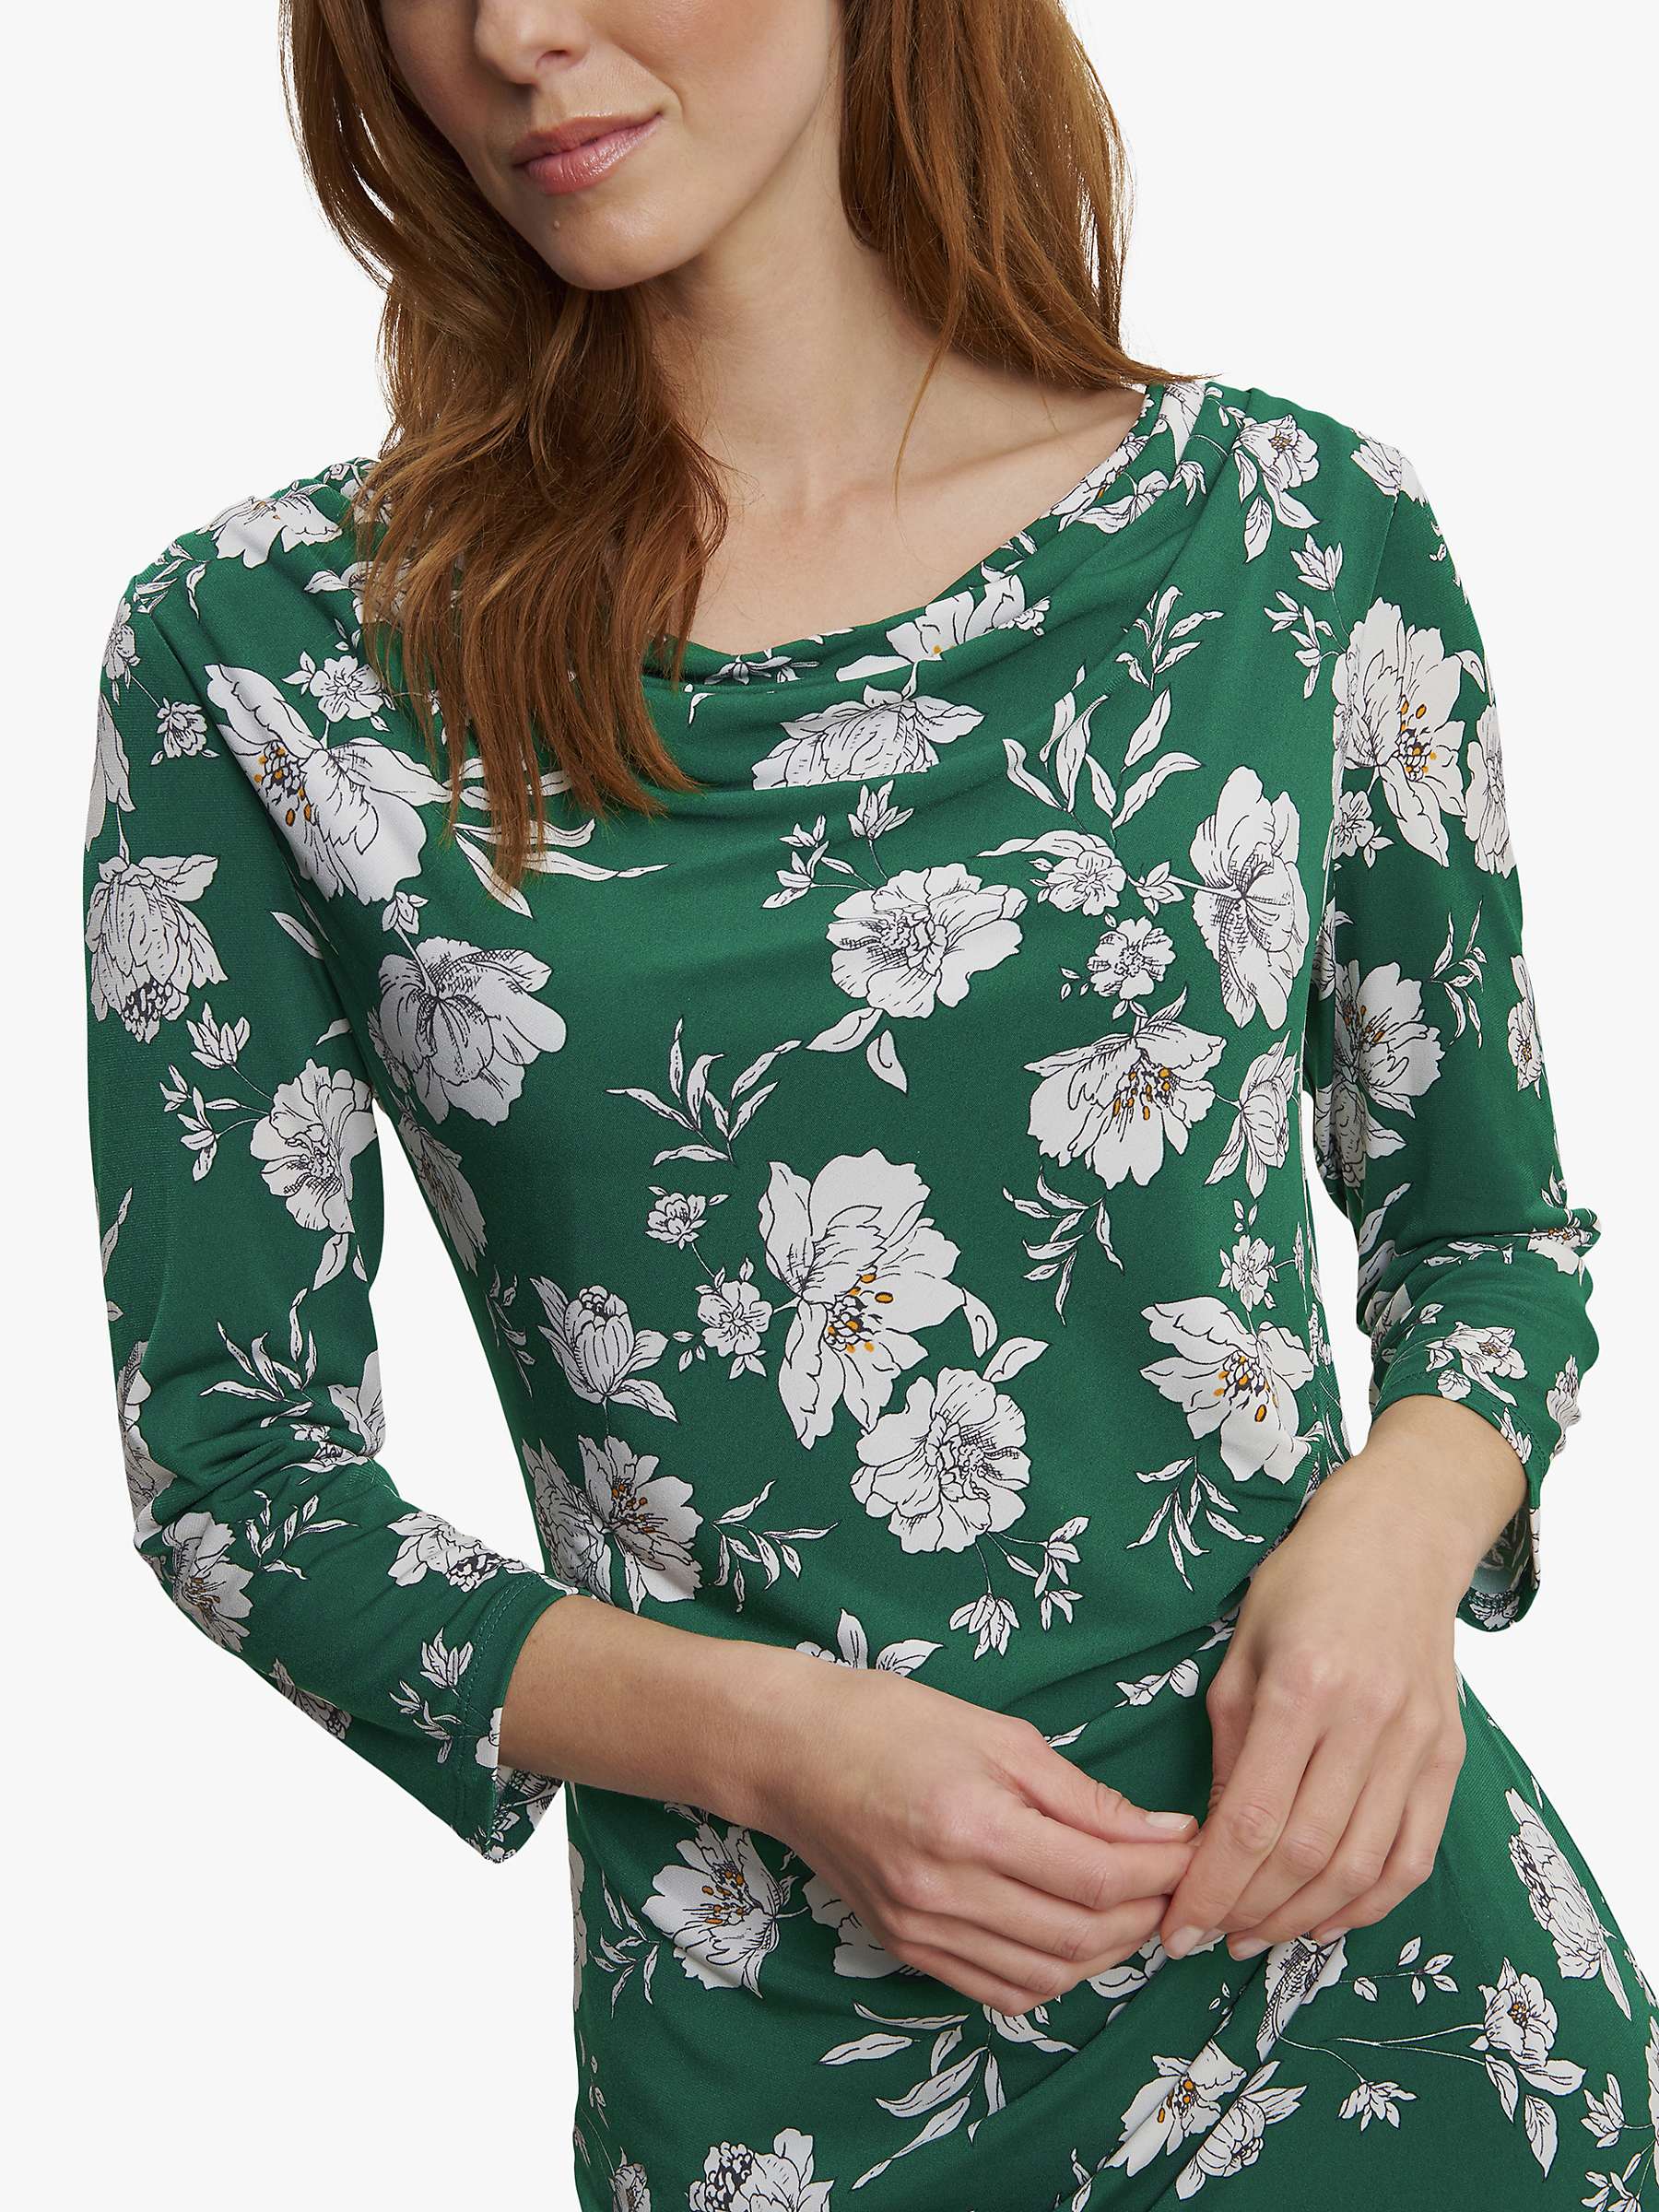 Buy Gina Bacconi Aleta Floral Print Jersey Dress, Green Online at johnlewis.com